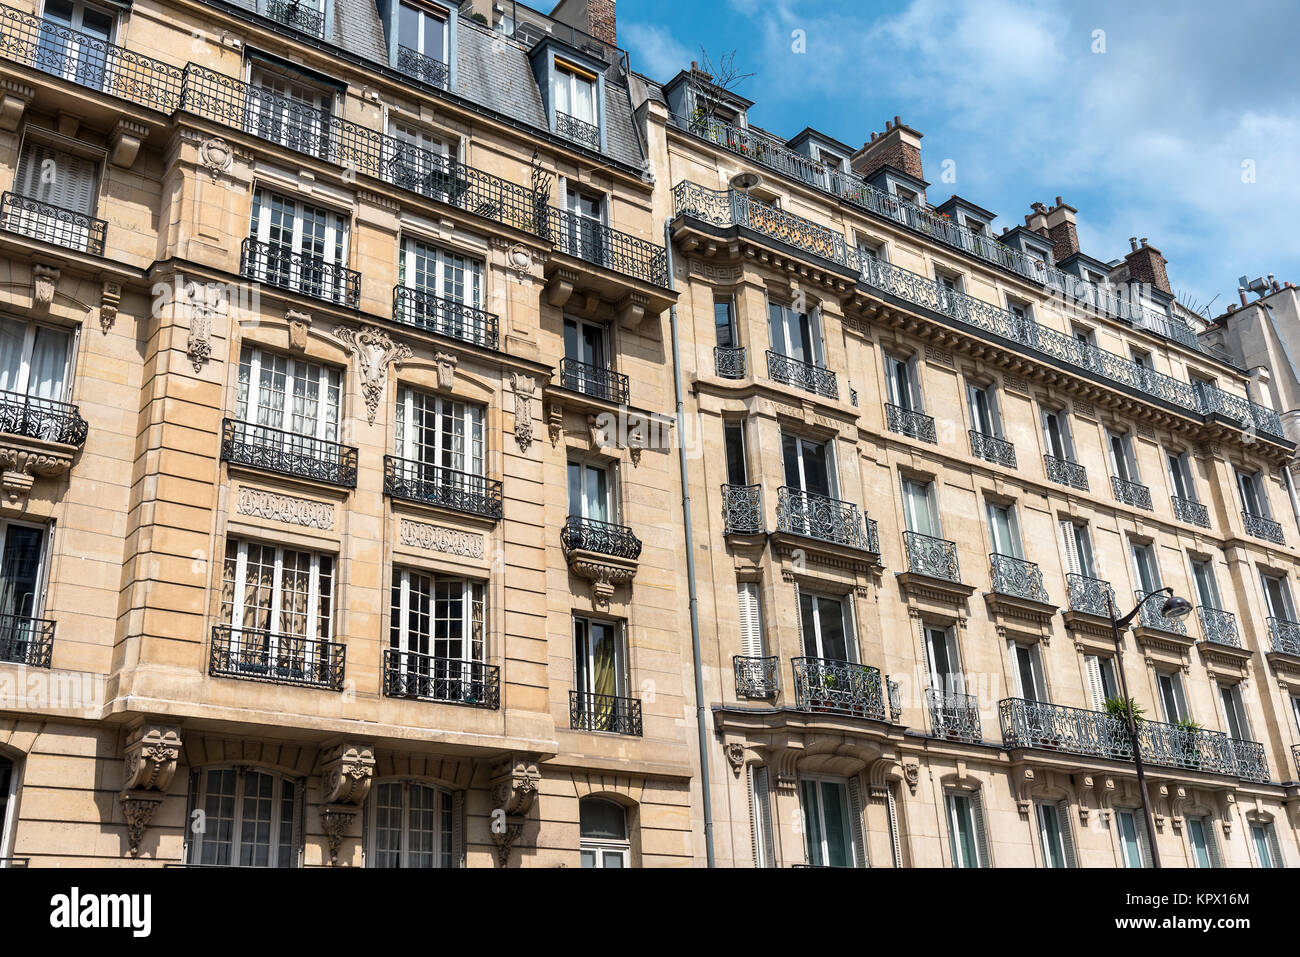 Typical houses in paris fotografías e imágenes de alta resolución - Alamy